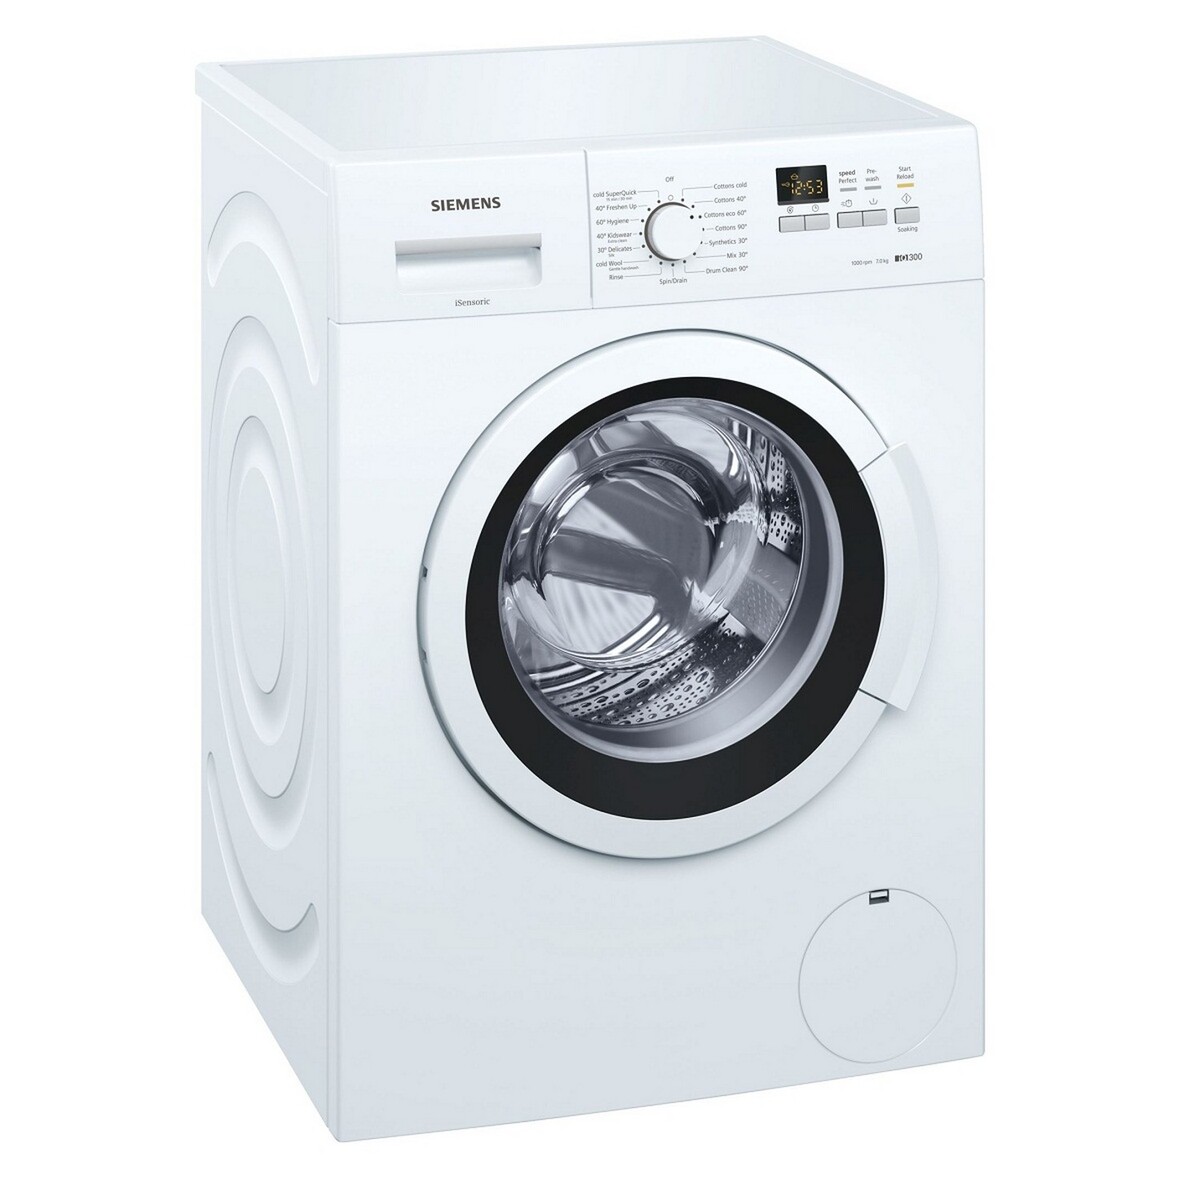 Siemens Fully Automatic Washing Machine WM10K161IN 7kg